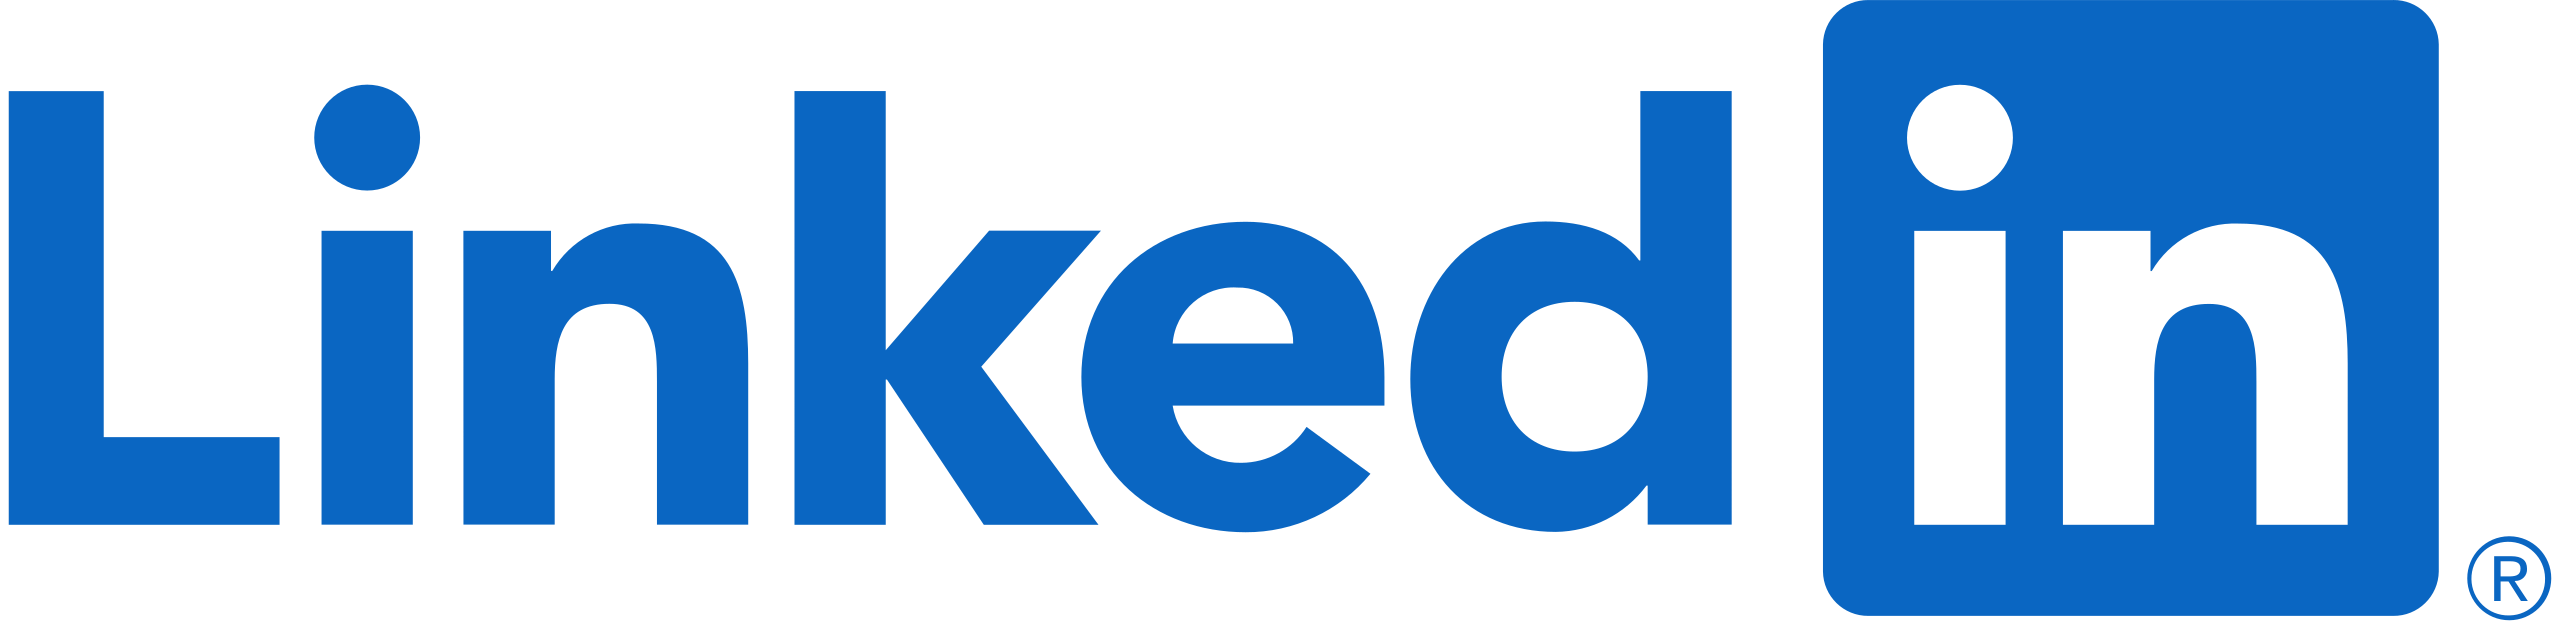 LinkedIn_Logo_2013.svg